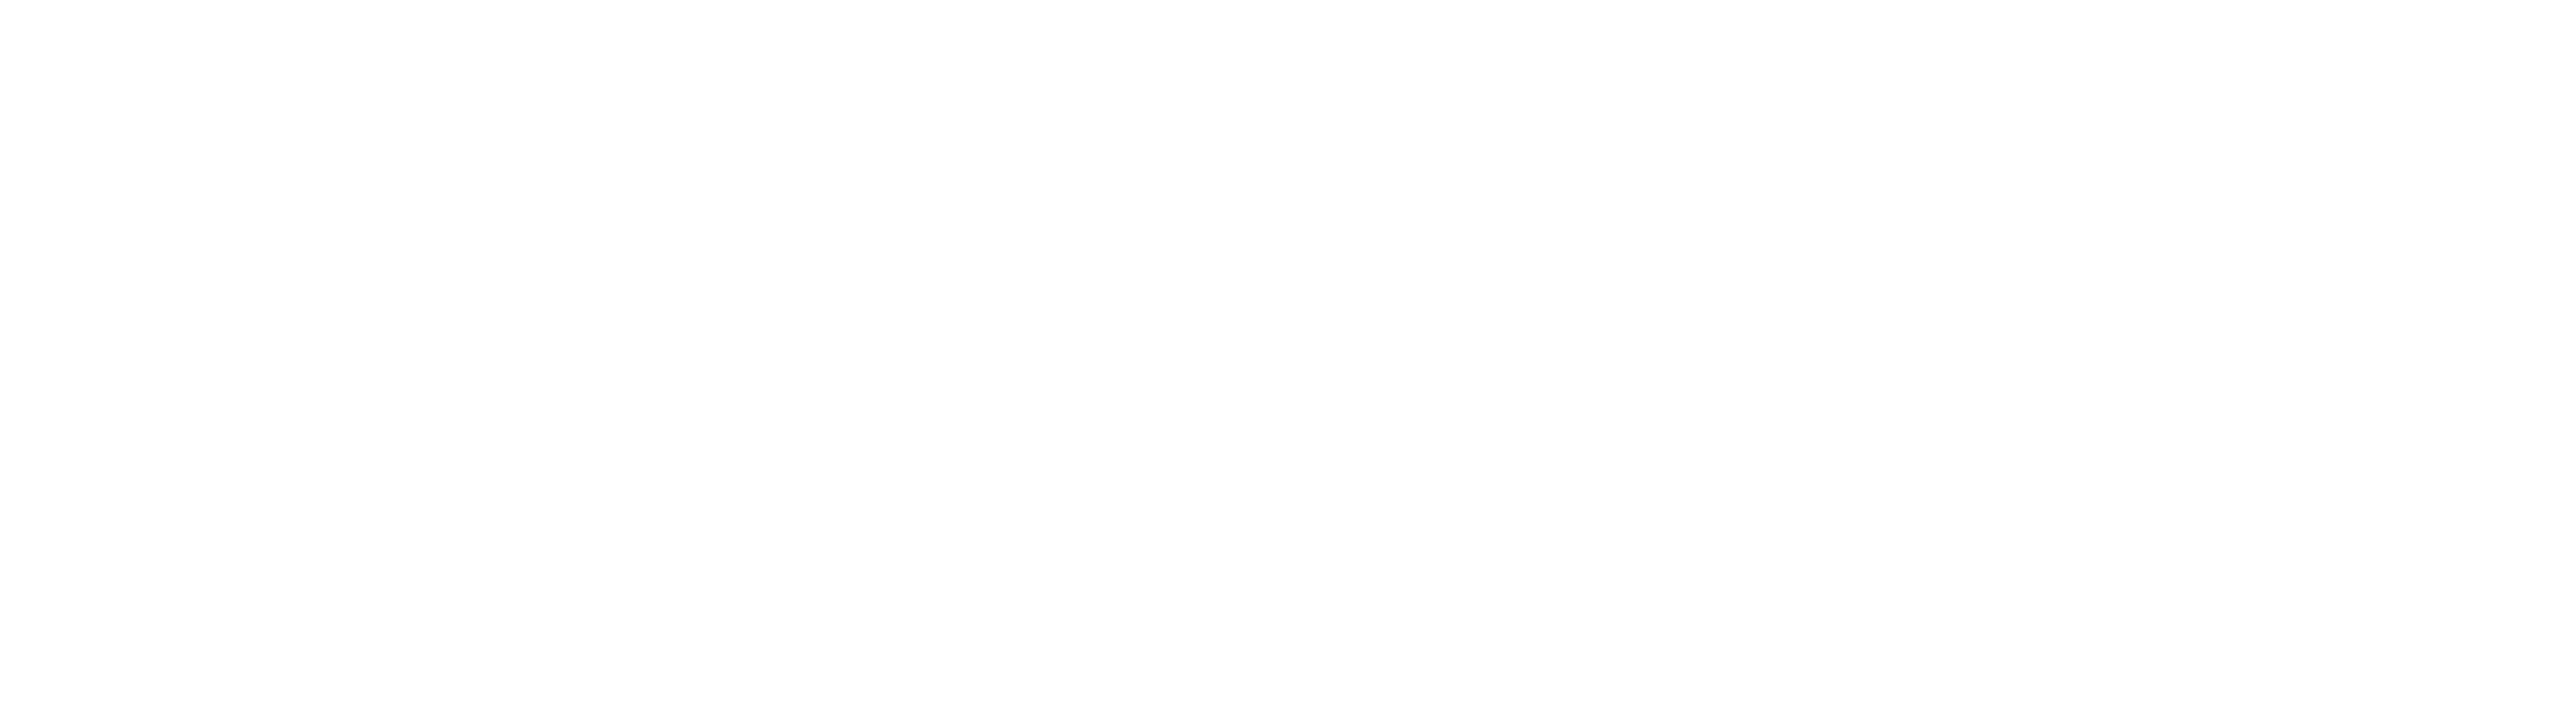 Schiller University 60th Anniversary Emblem with White Design